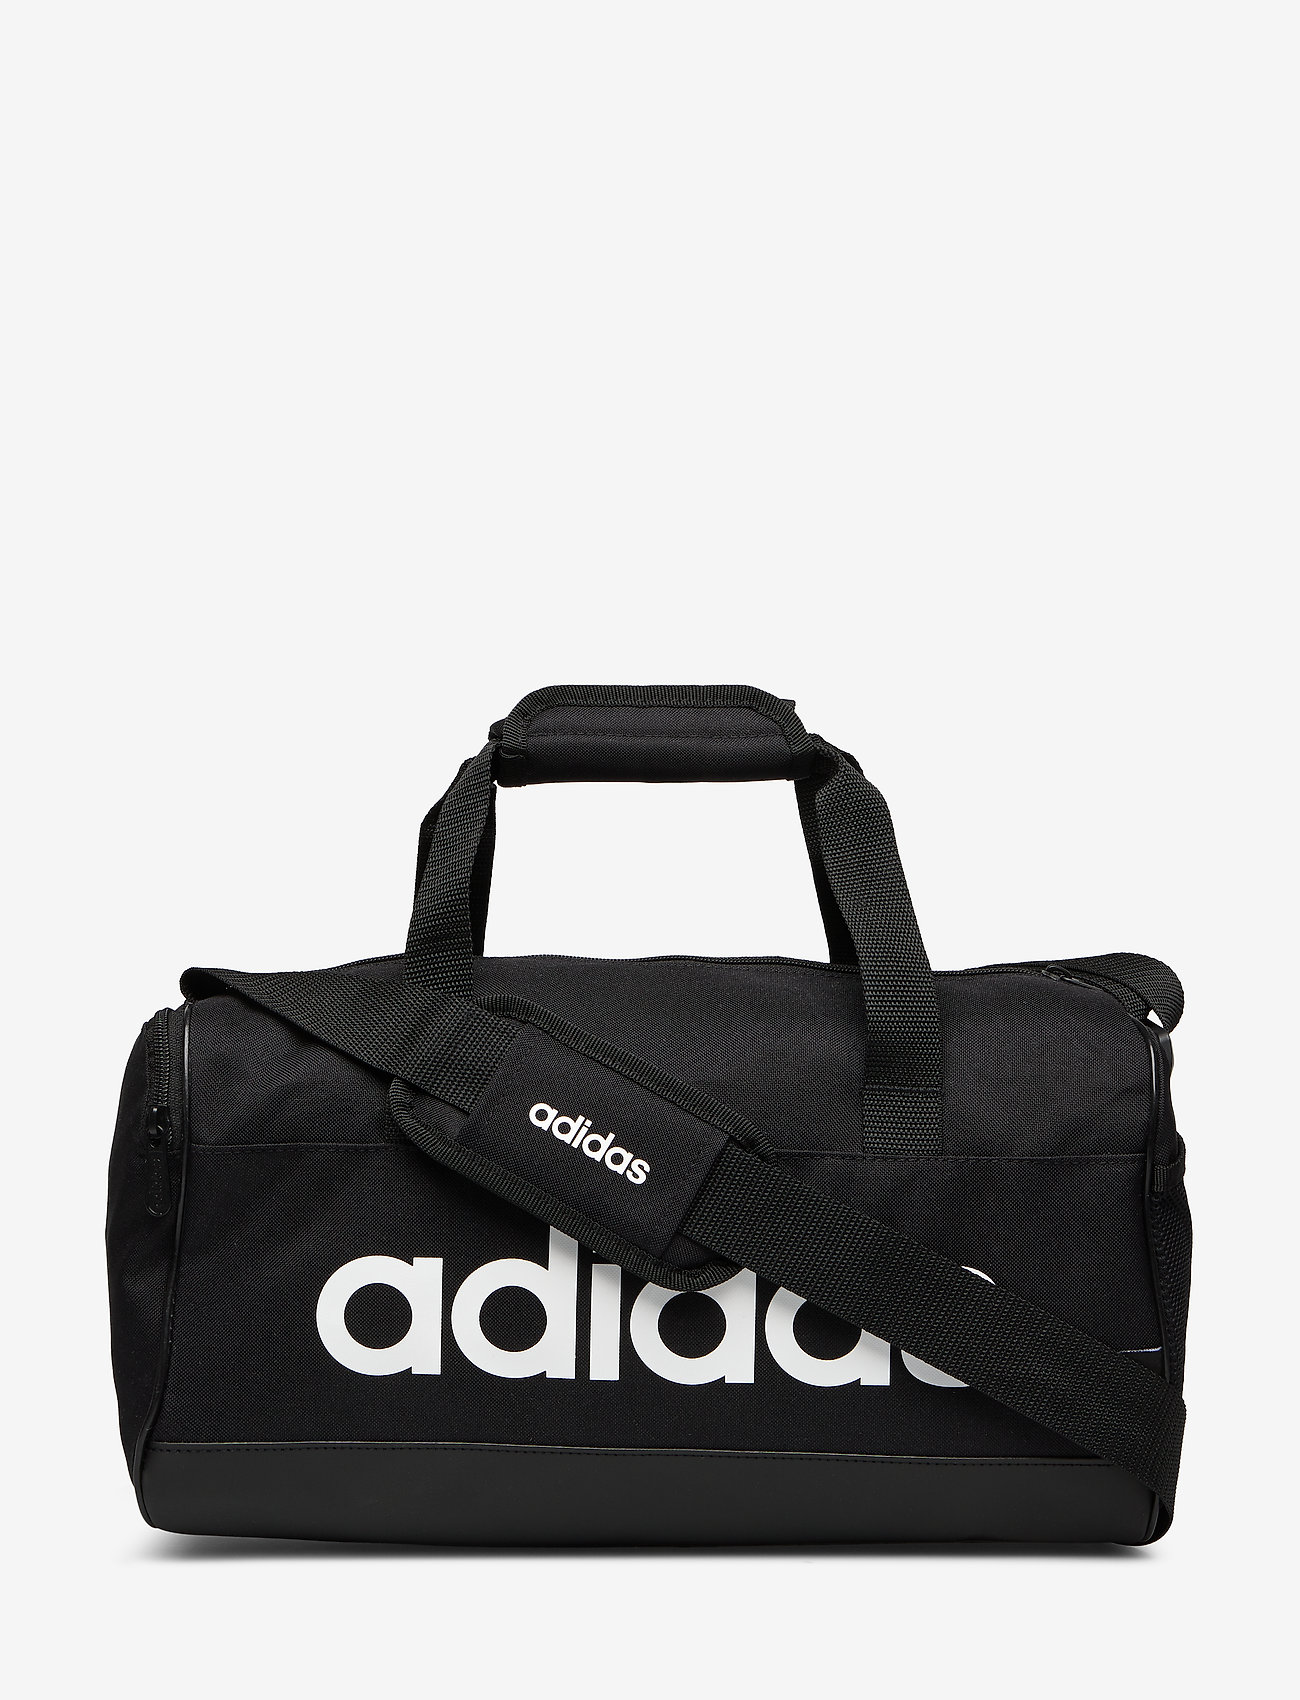 adidas bag black and white